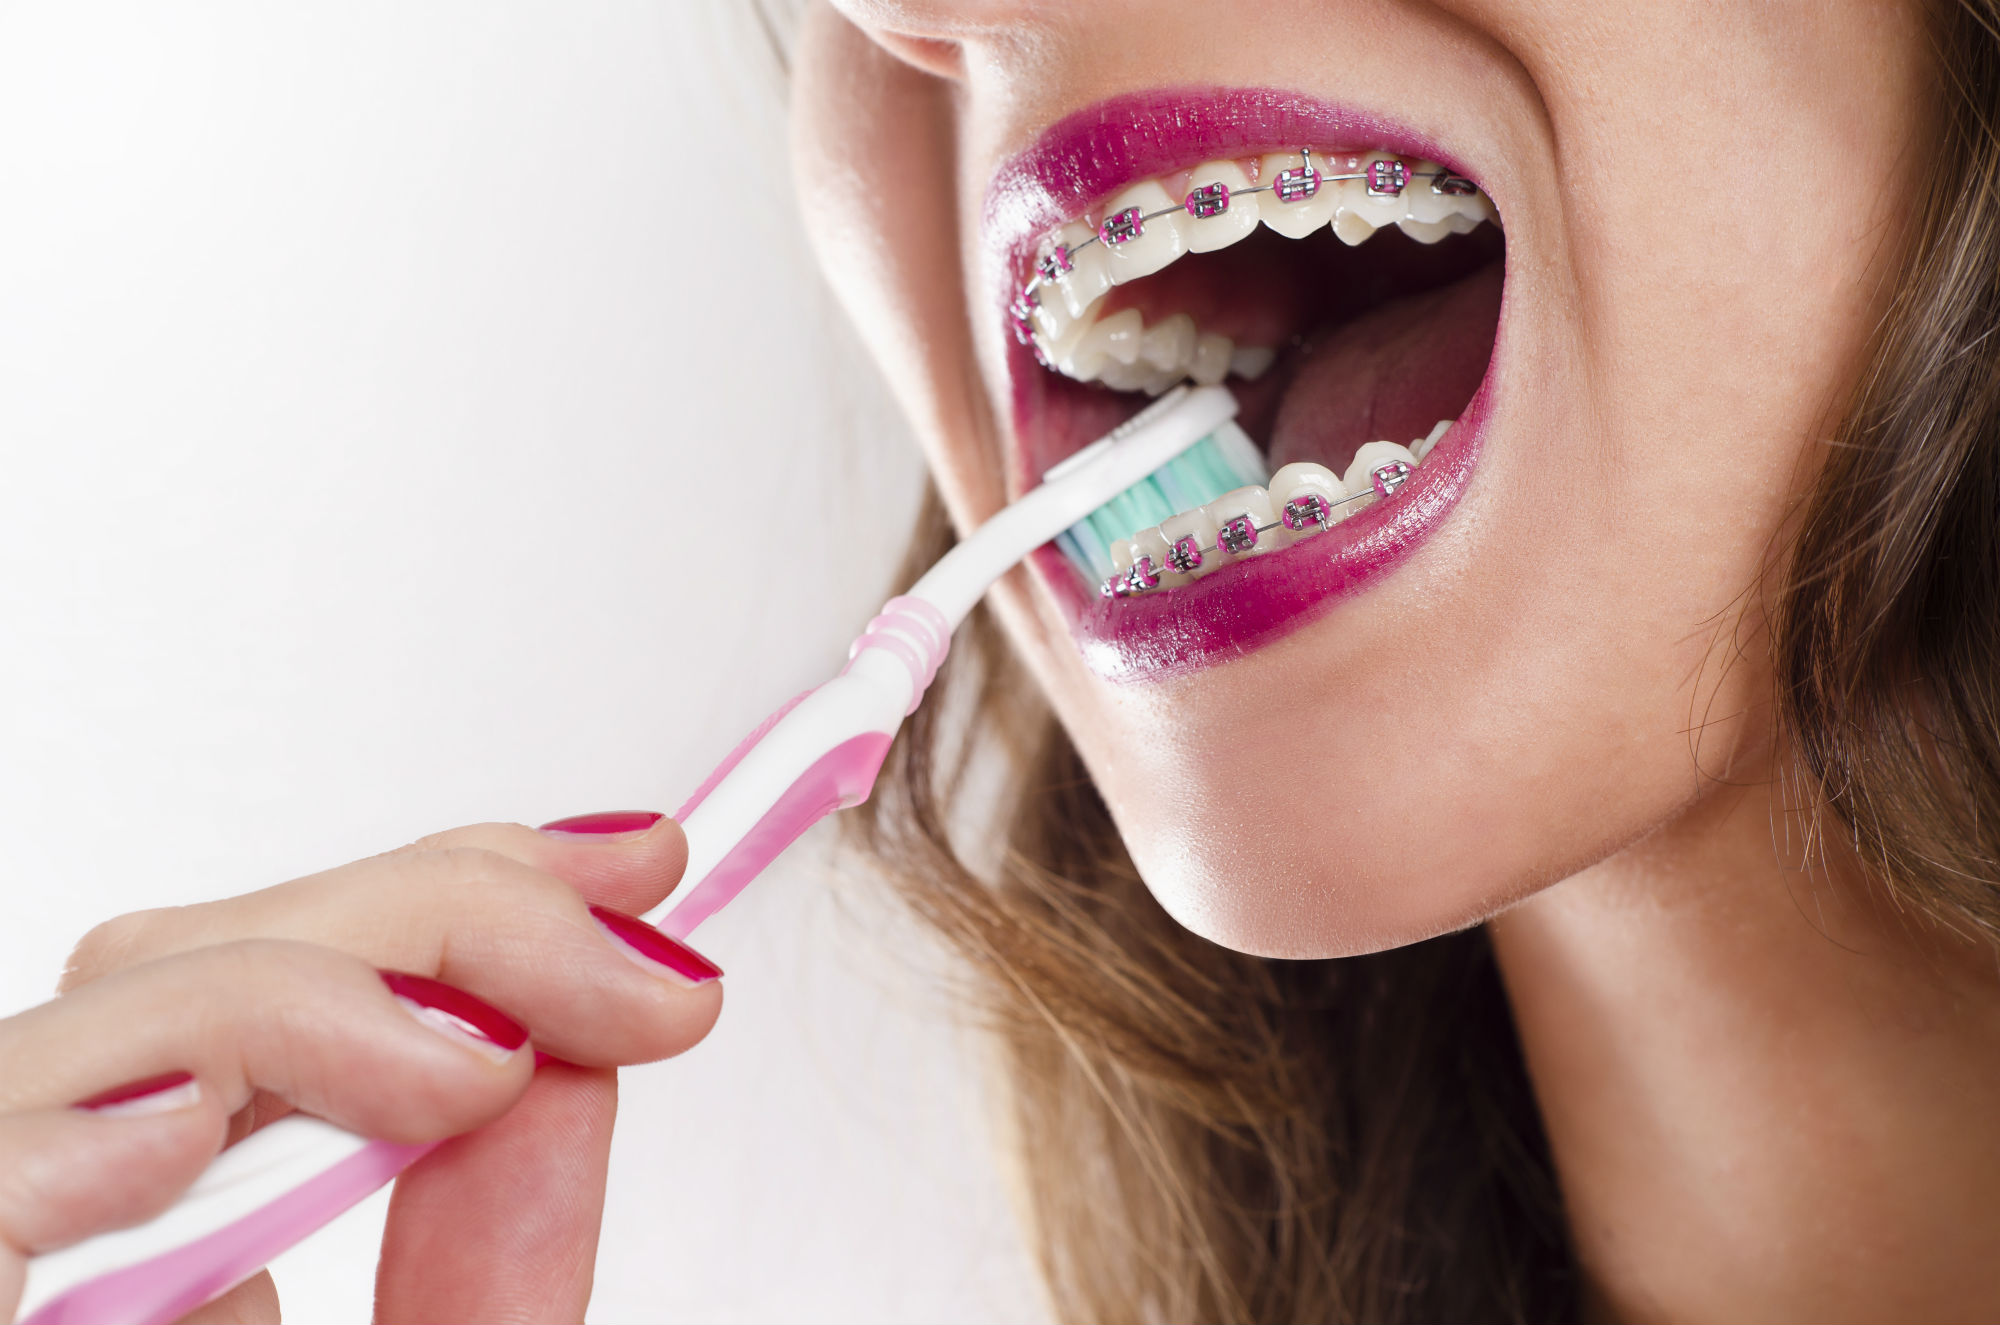 IStock Image / Orthodontics no guarantee of long-term oral health